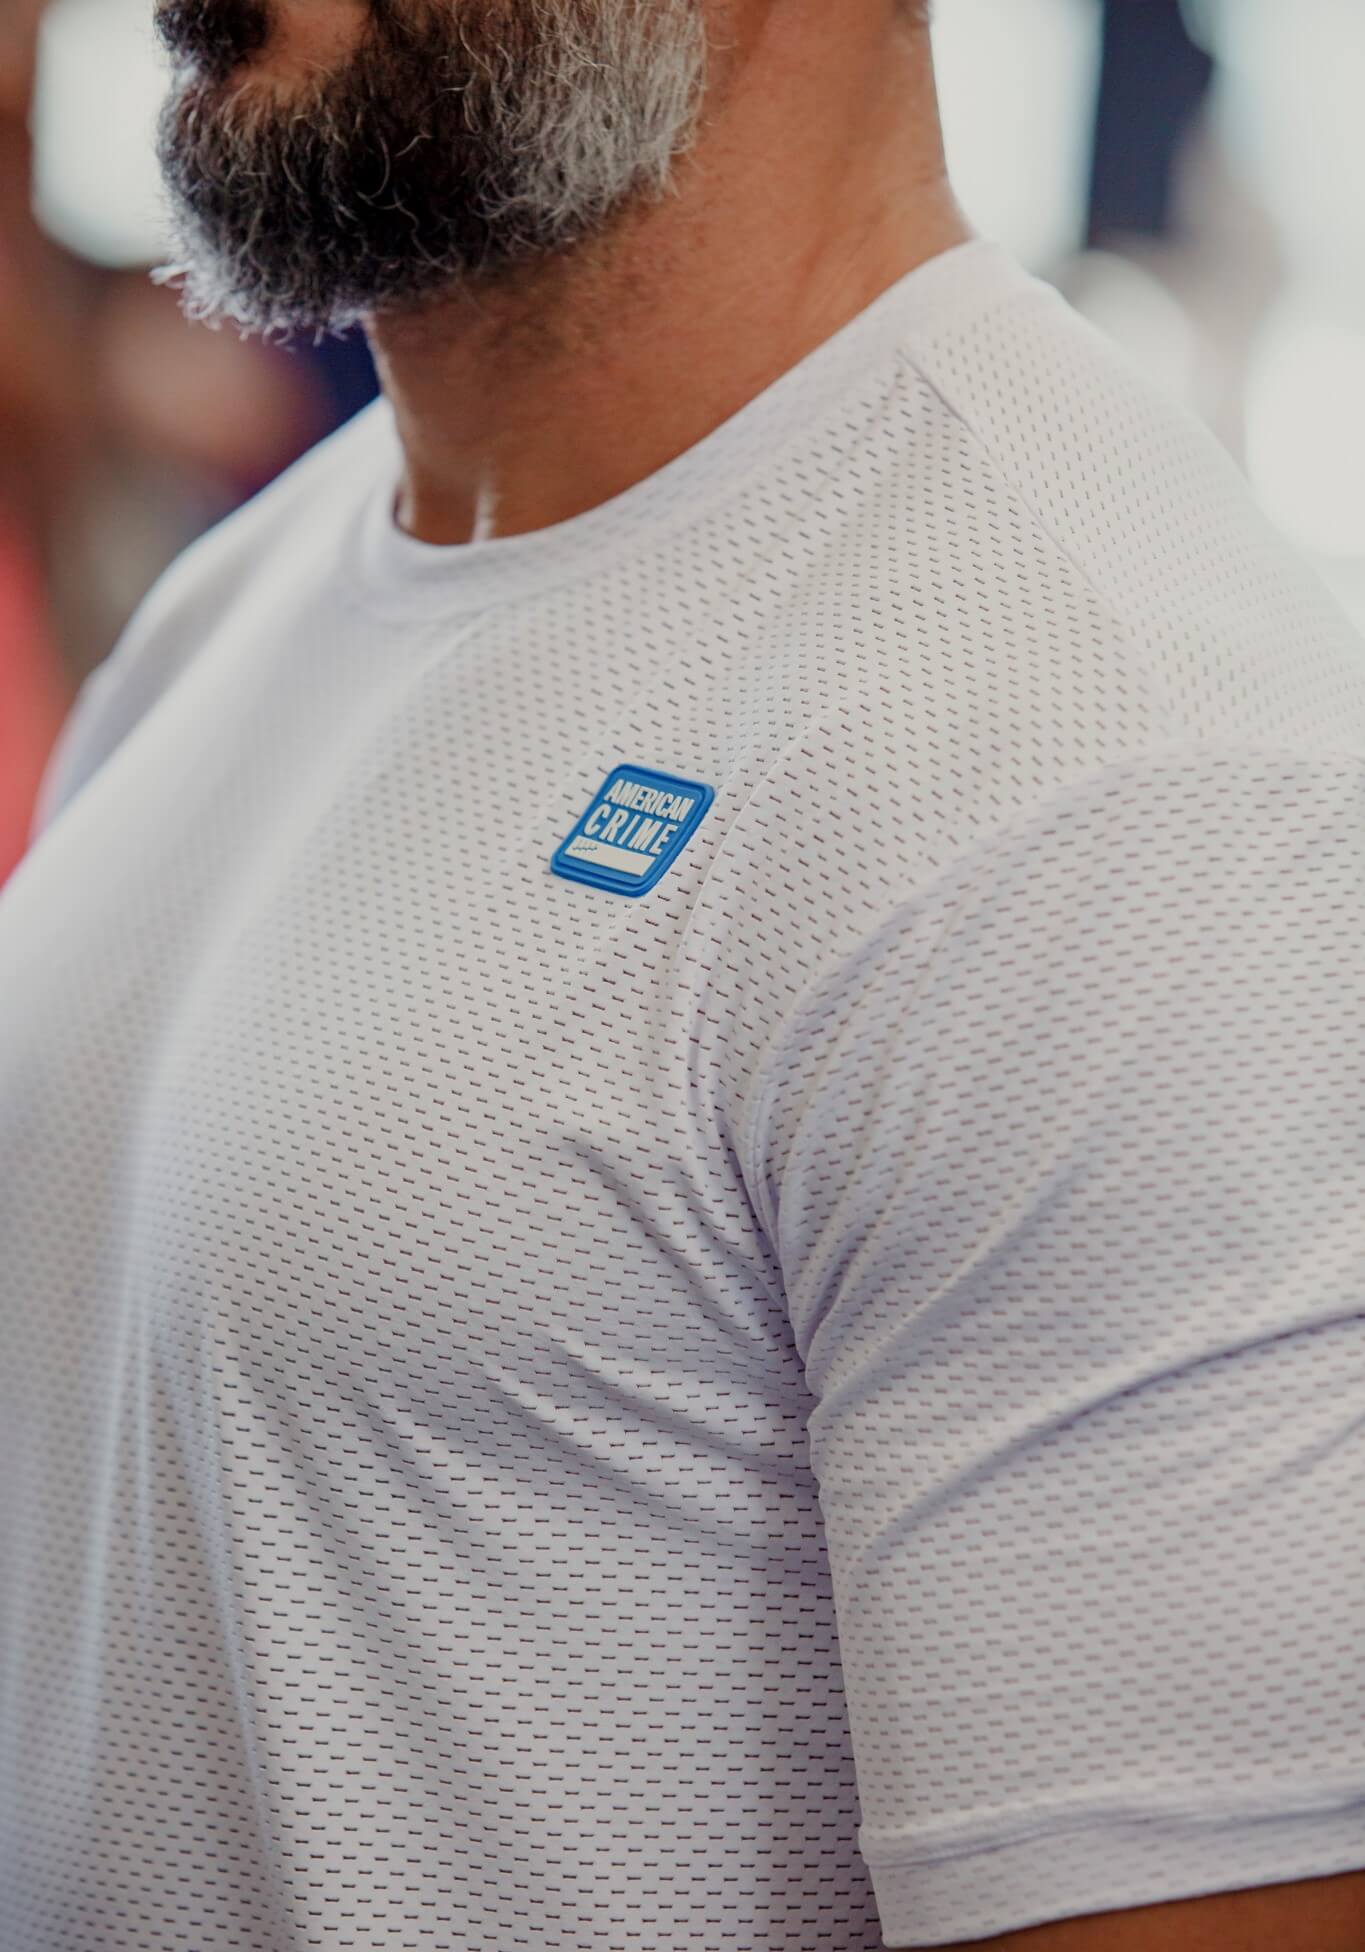 Camiseta training air all white blue logo 3